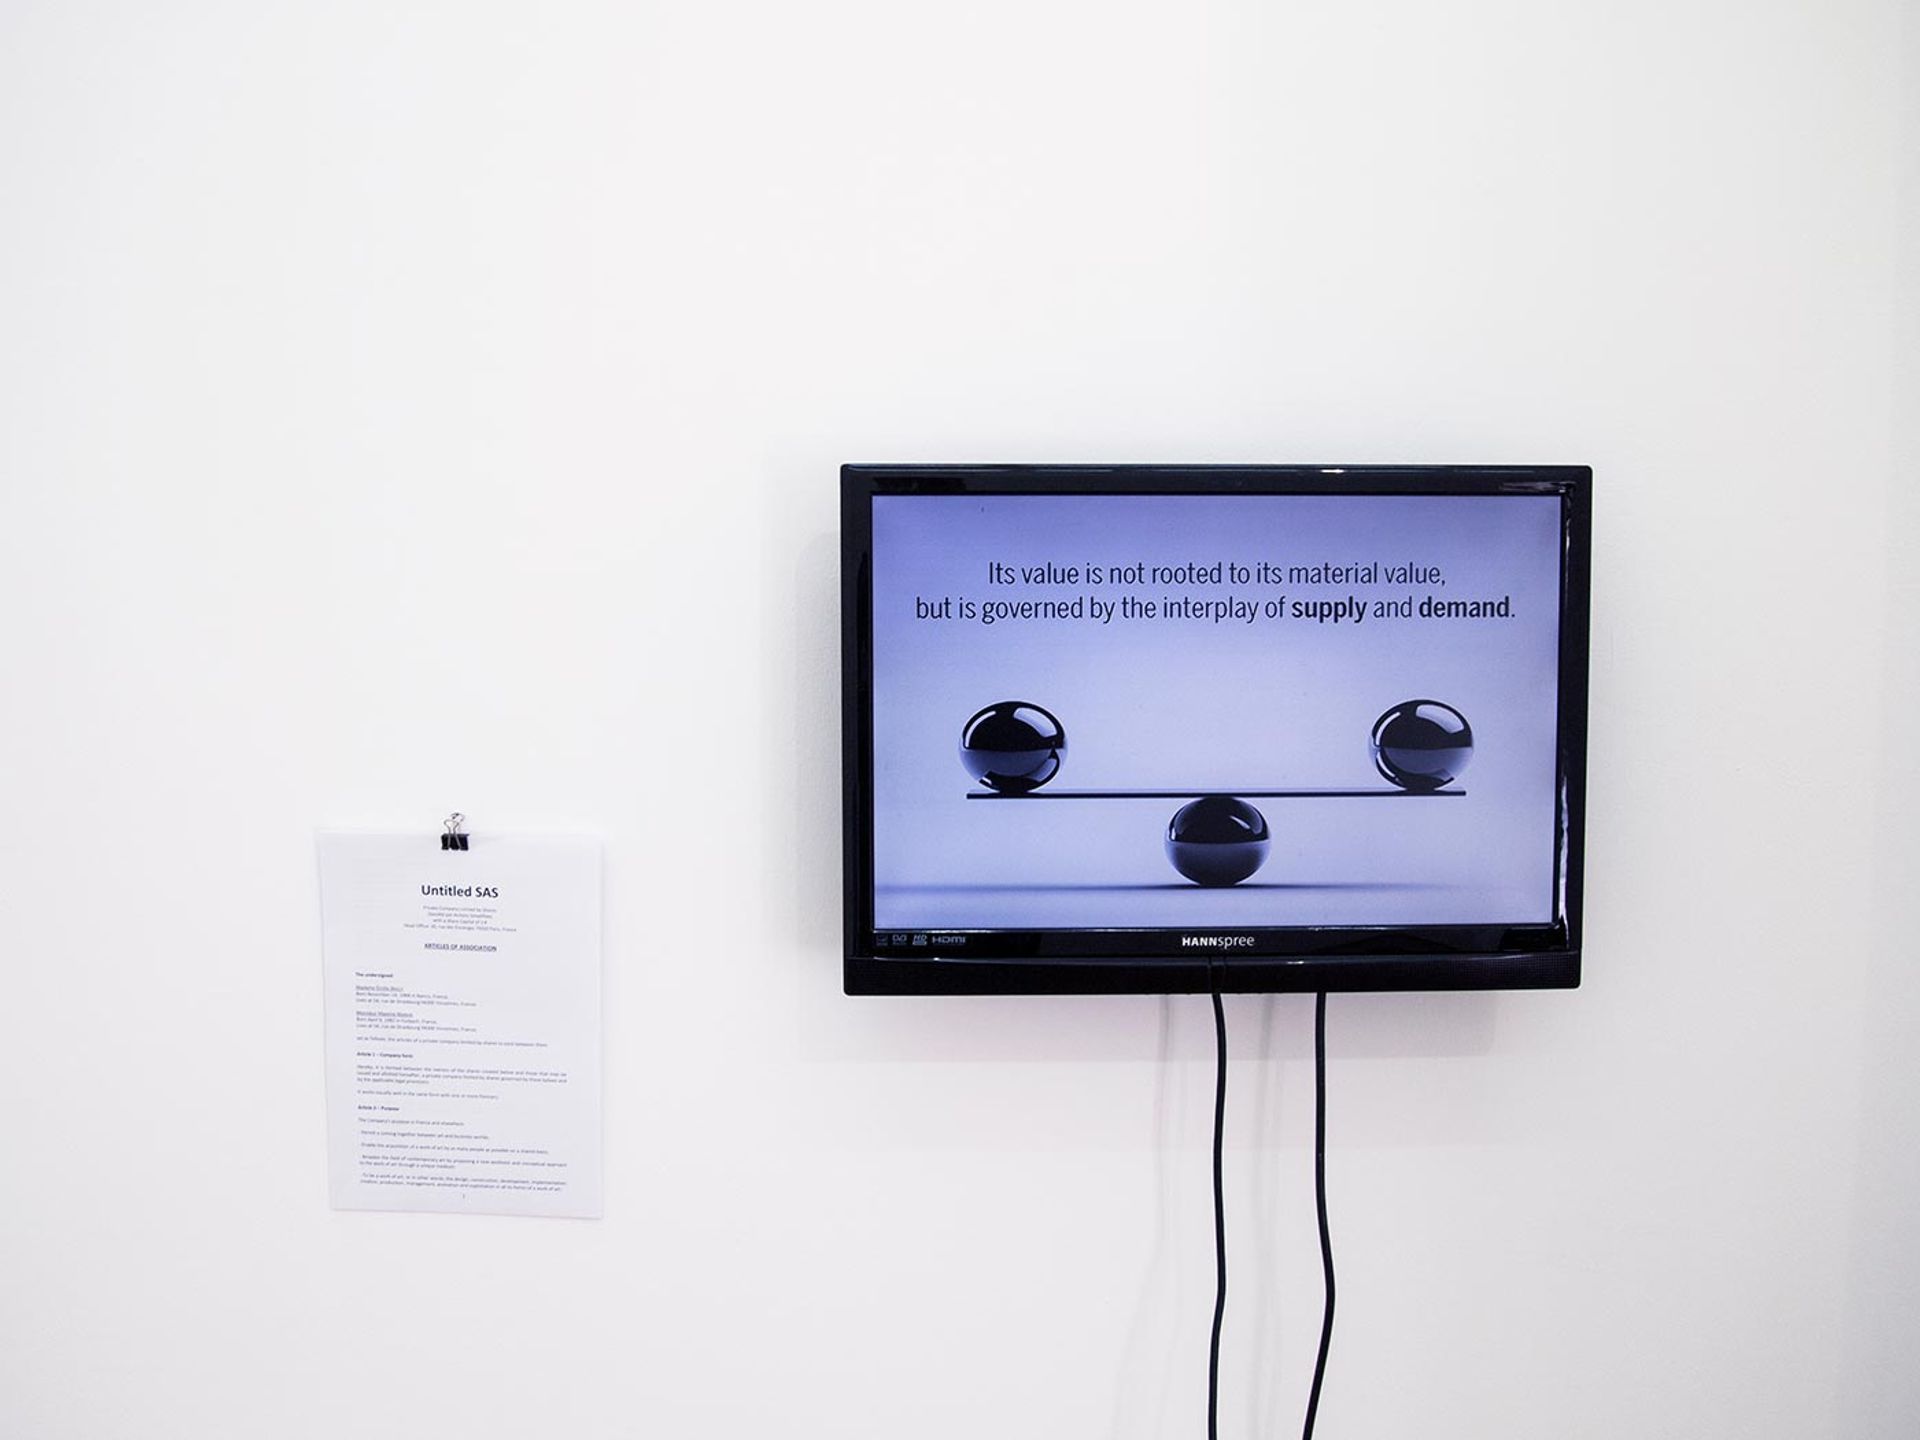 É. Brot & M.Marion, Untitled SAS, installation view, 2018